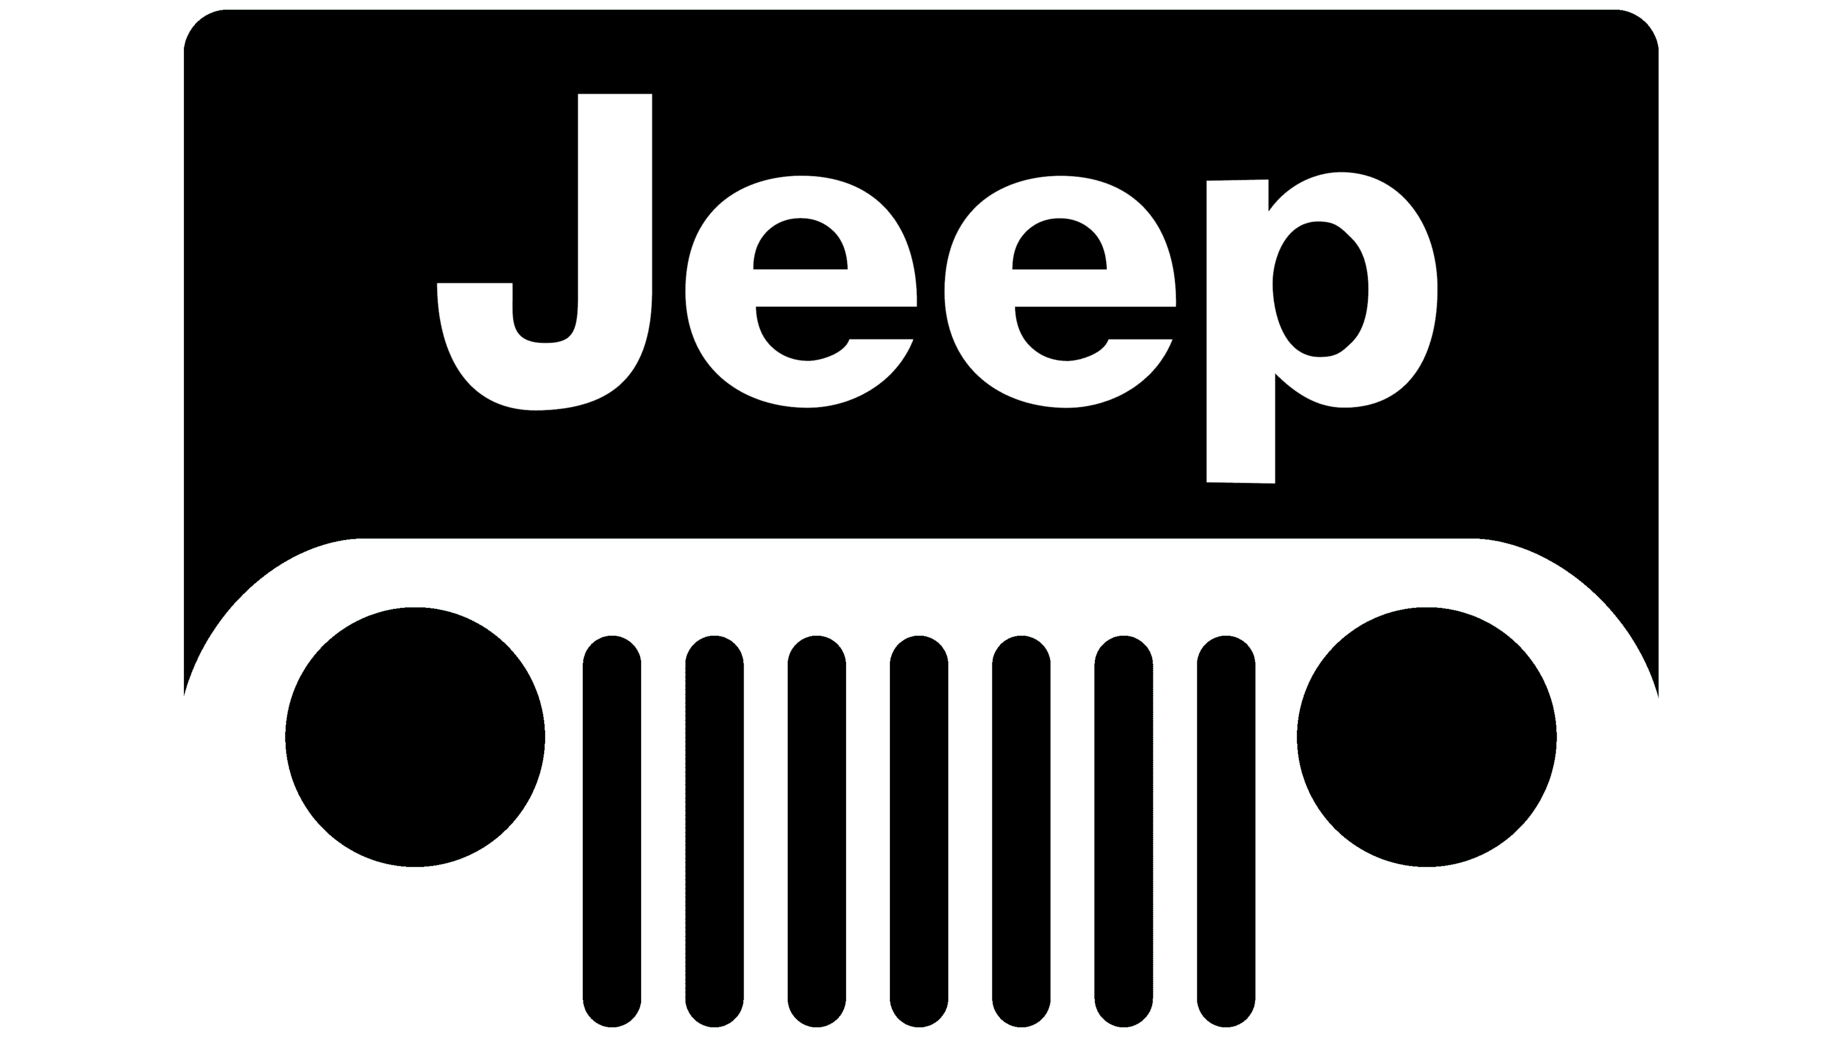 Jeep symbol